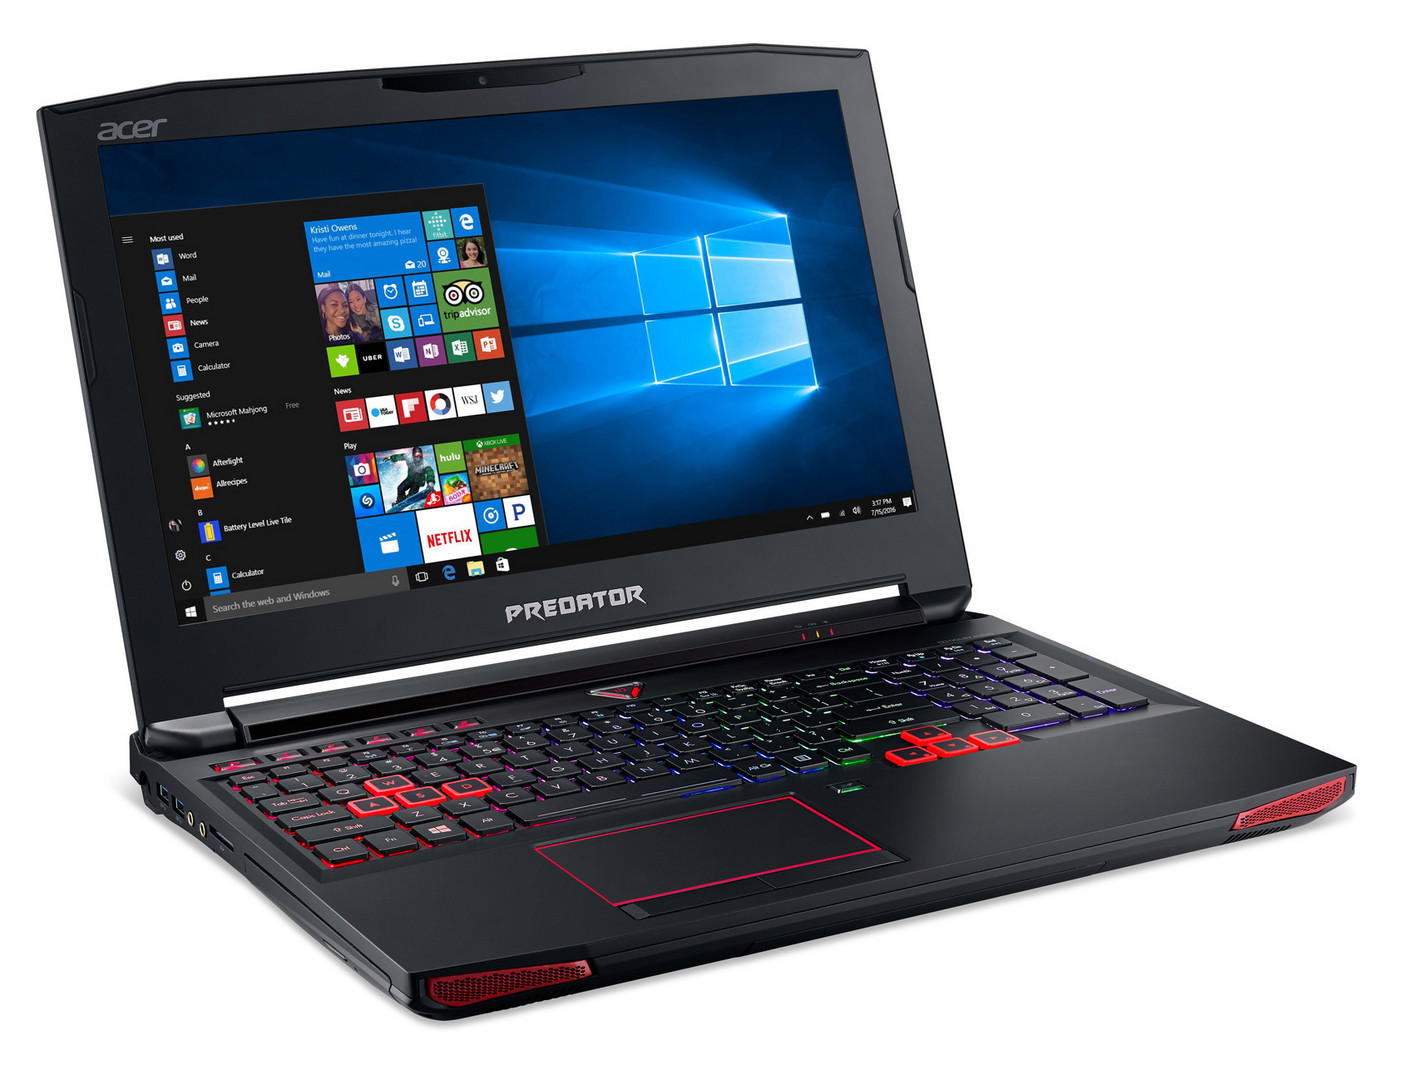  Acer Predator 15  7700HQ GTX 1070 Full HD Laptop Review 